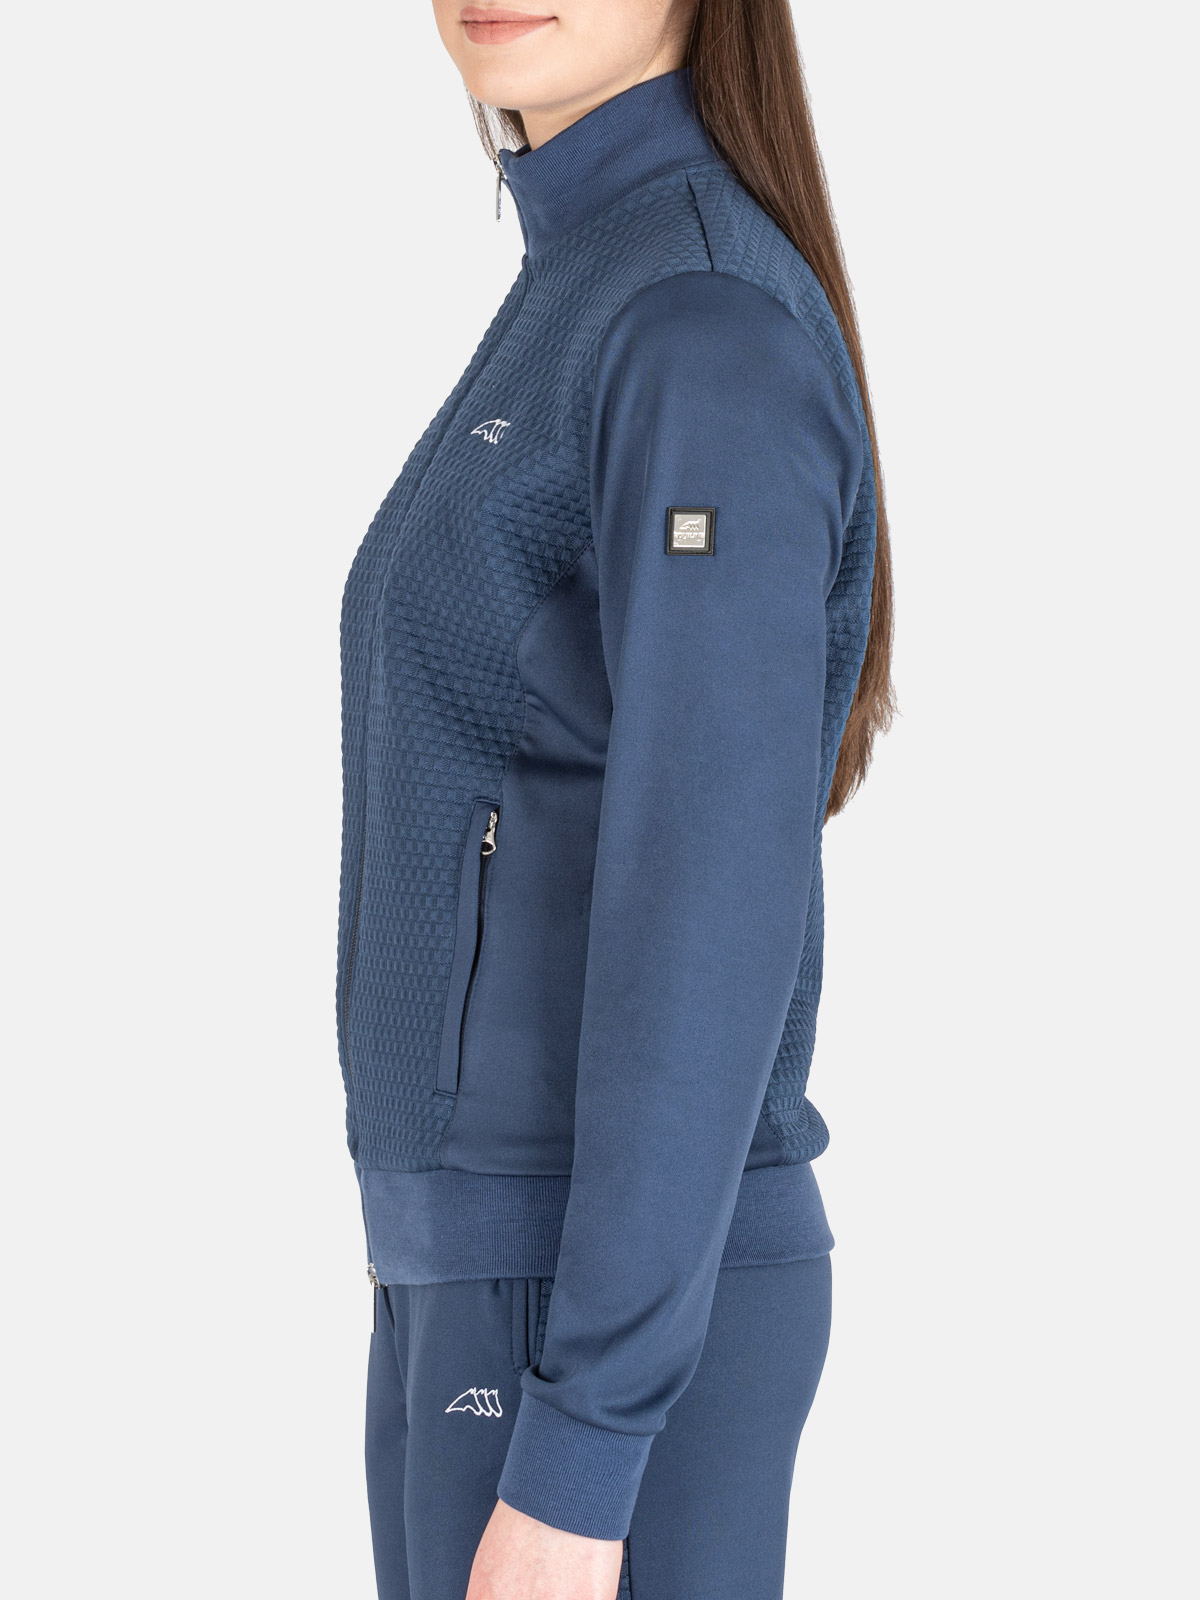 EQUILINE Damen Sweat Jacke Trainingsjacke Elaste - diplomatic blue - M - 4